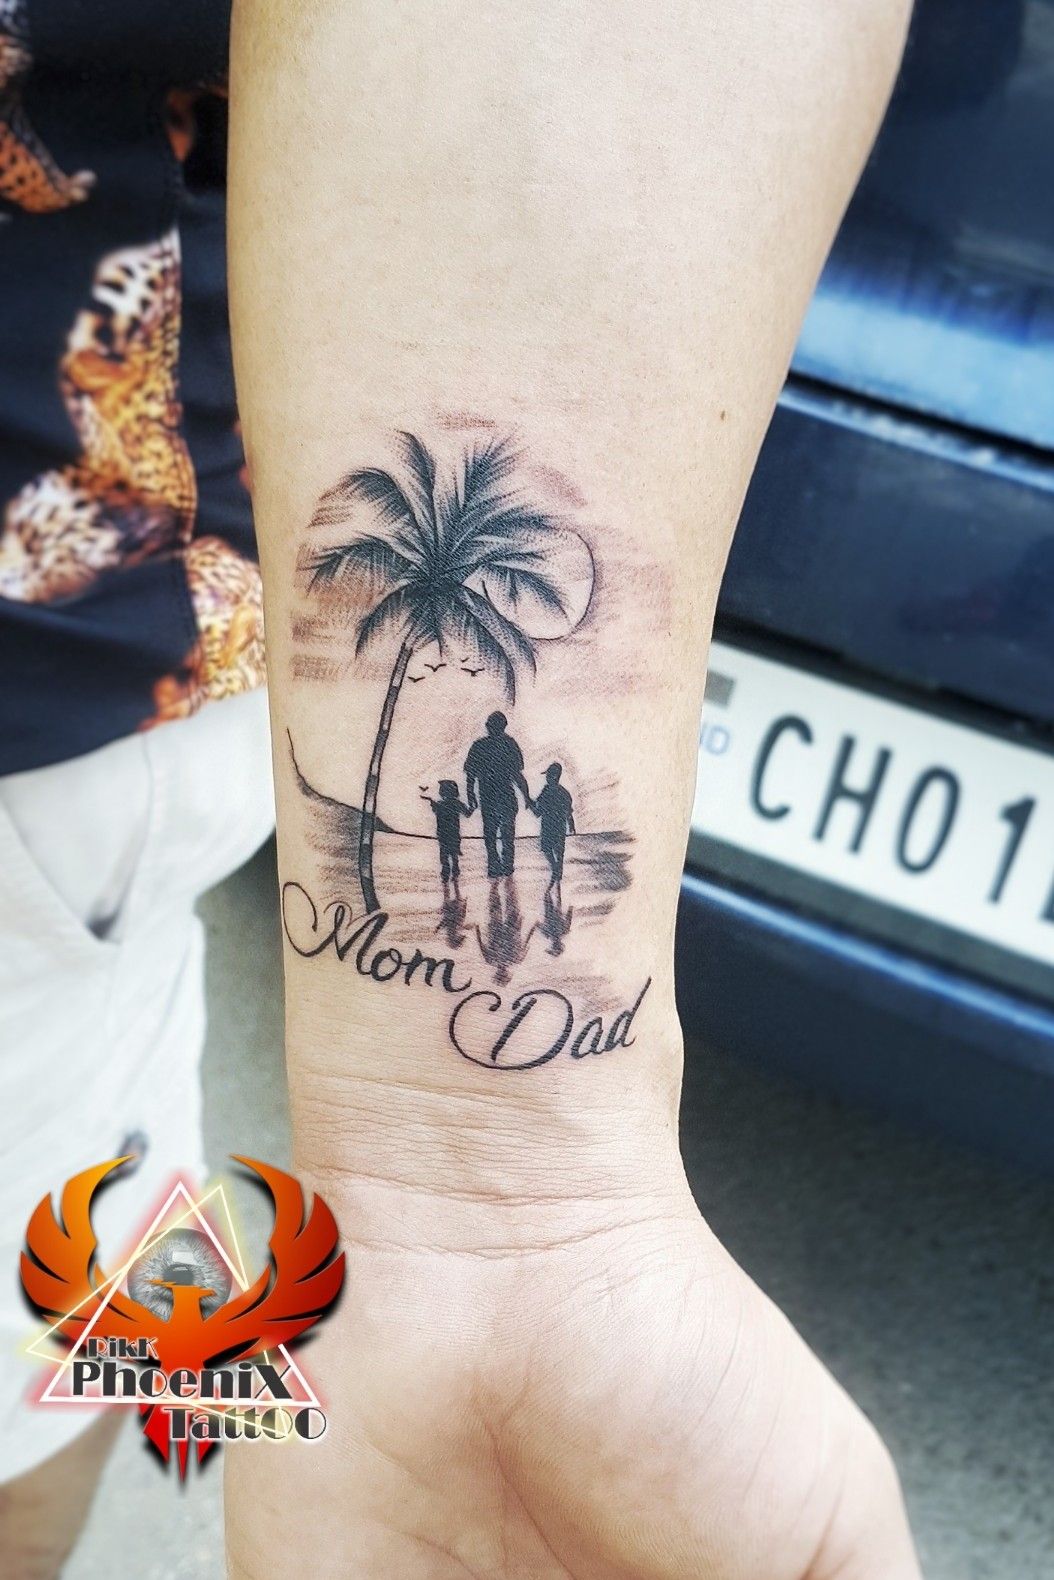 Mom dad with baby tattoo  Workaholik Tattoo Studio  Facebook